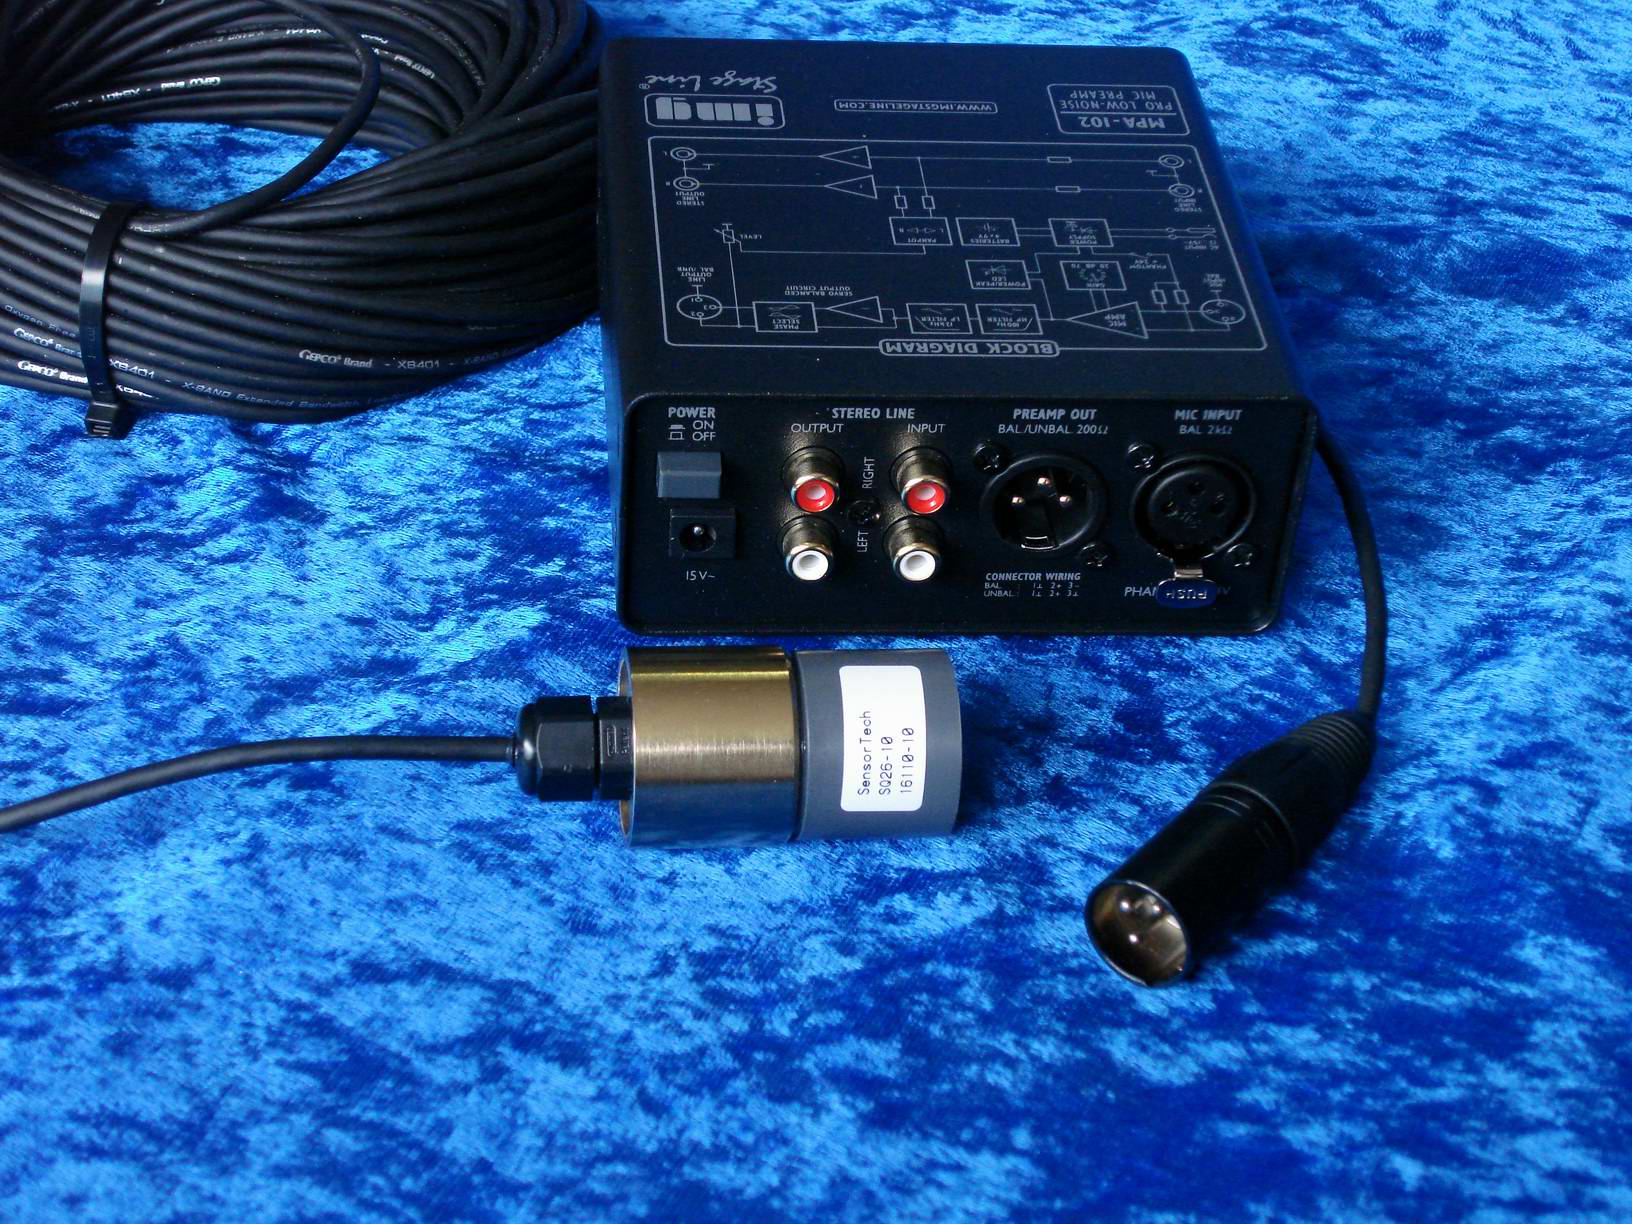 Etec Hydrophone amplifiers, acoustic Pinger detection, hydrophones,  electronic custom design, ortofon vintage gear